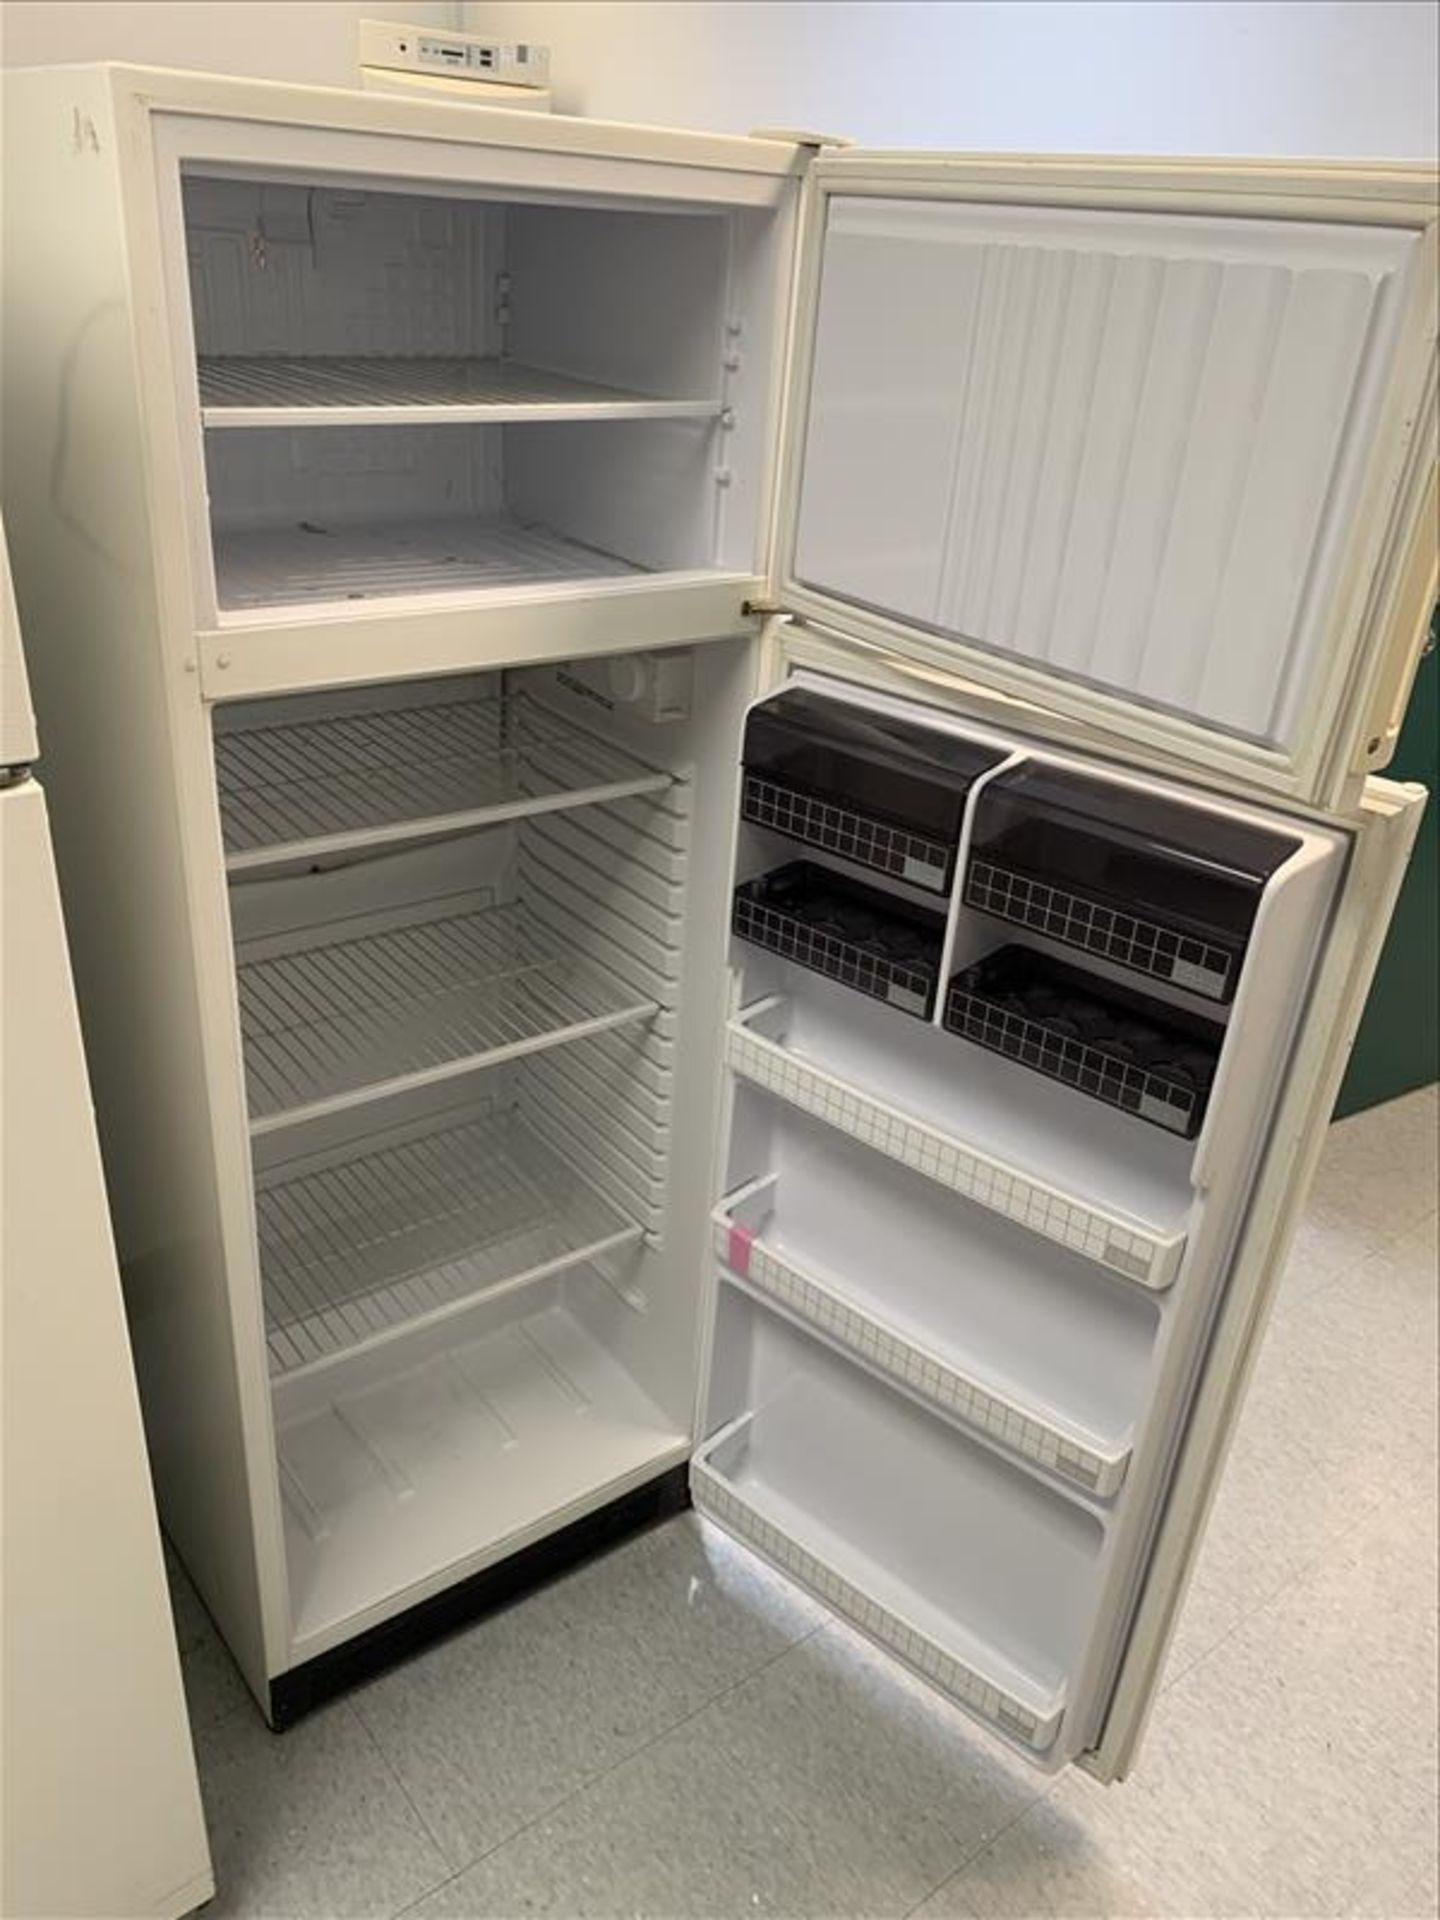 Danby Laboratory Refrigerator/ Freezer mod. D 740 W - Image 2 of 2